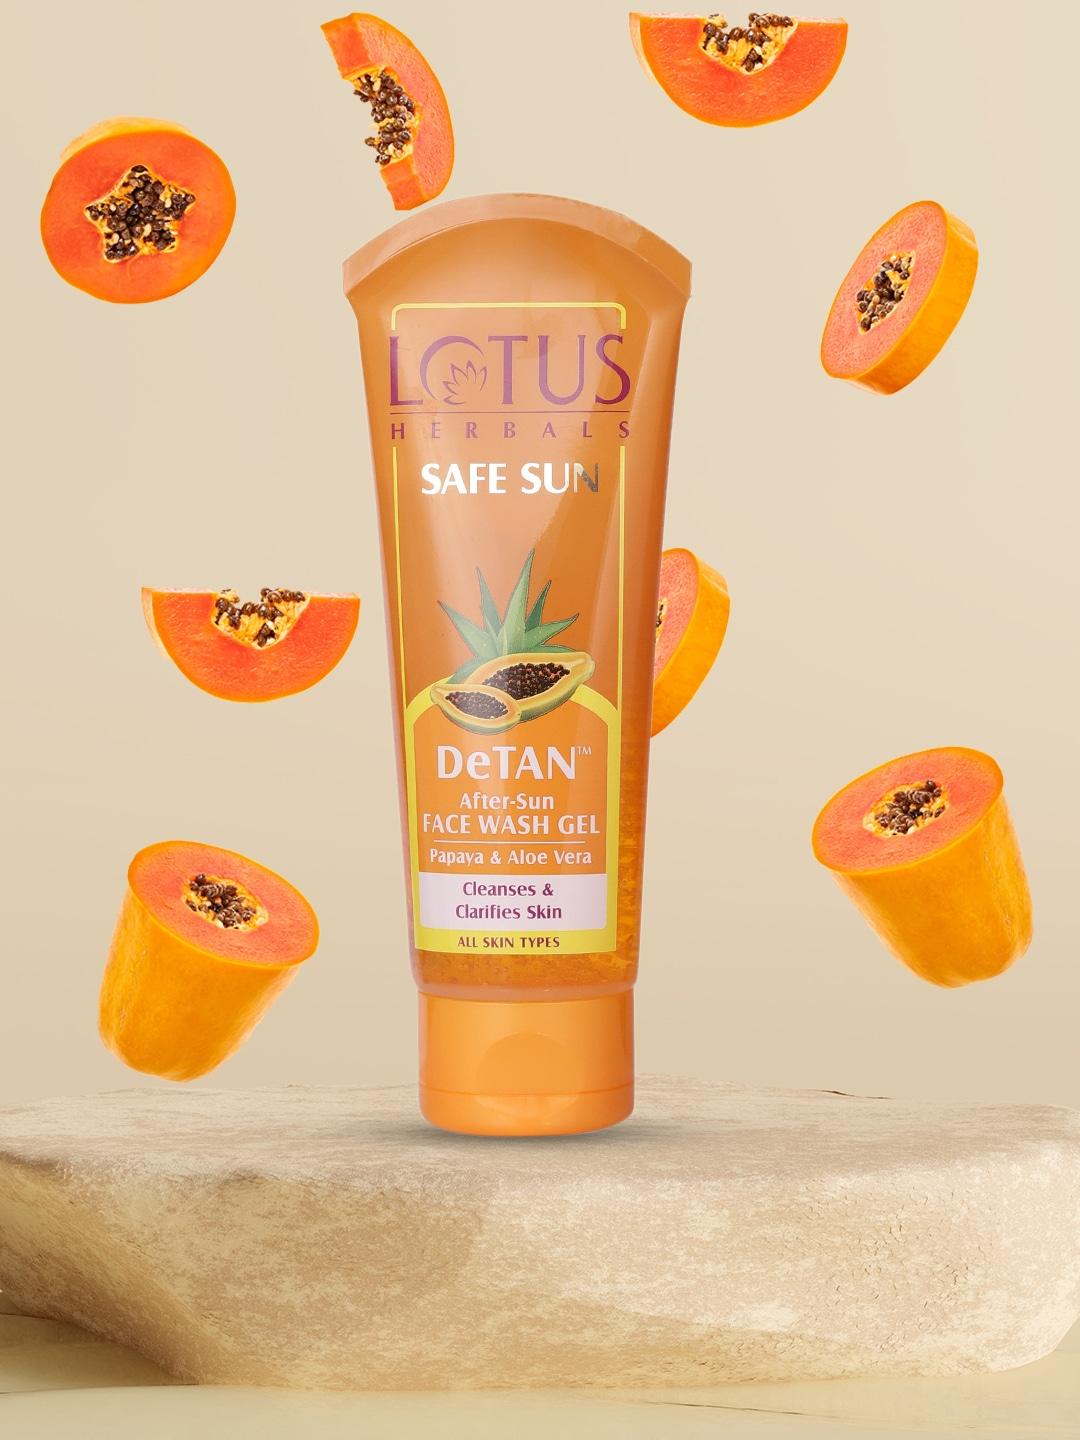 Lotus Herbals Unisex Safe Sun DeTAN After-Sun Face Wash Gel - 100 g